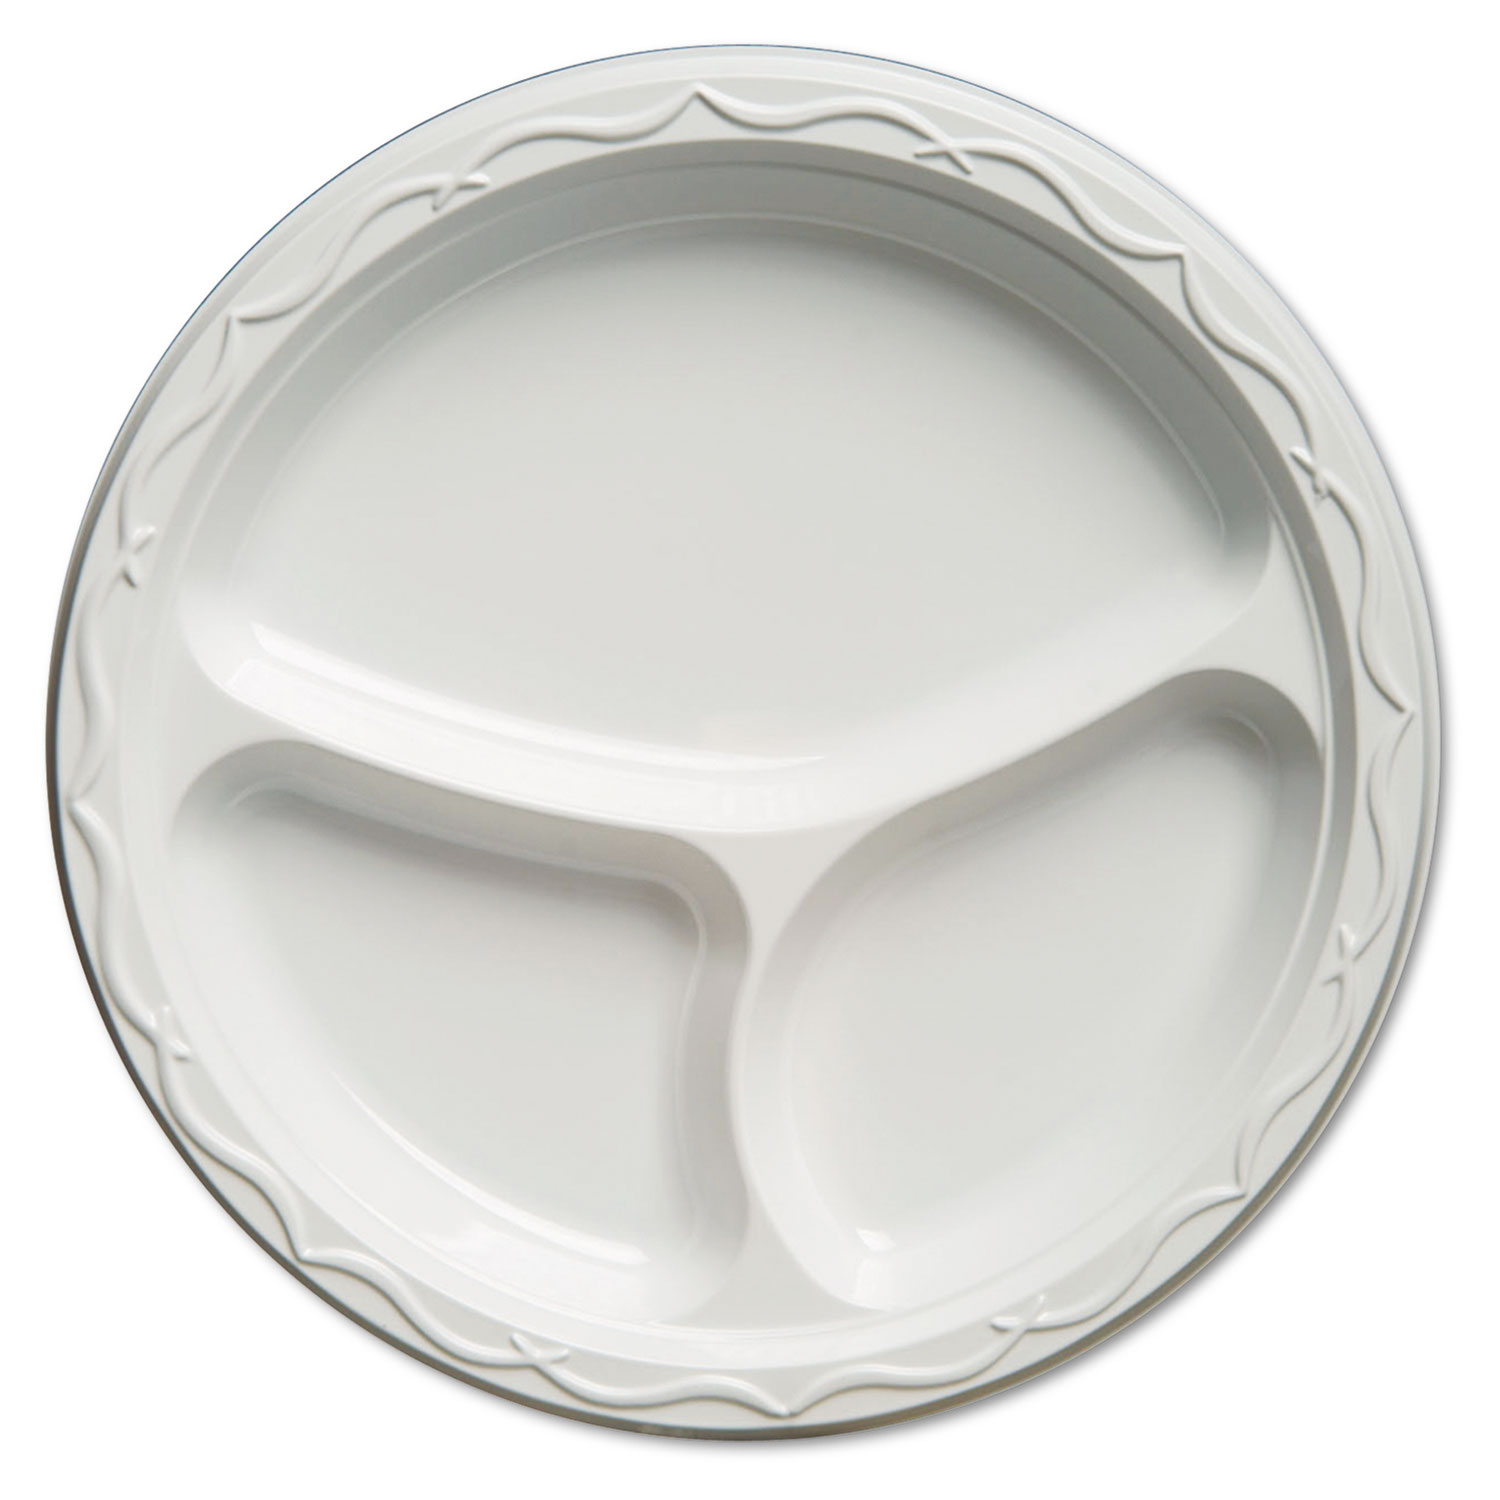  Genpak 71300--- Aristocrat Plastic Plates, 10 1/4 Inches, White, Round, 3 Compartments, 125/Pack (GNP71300) 